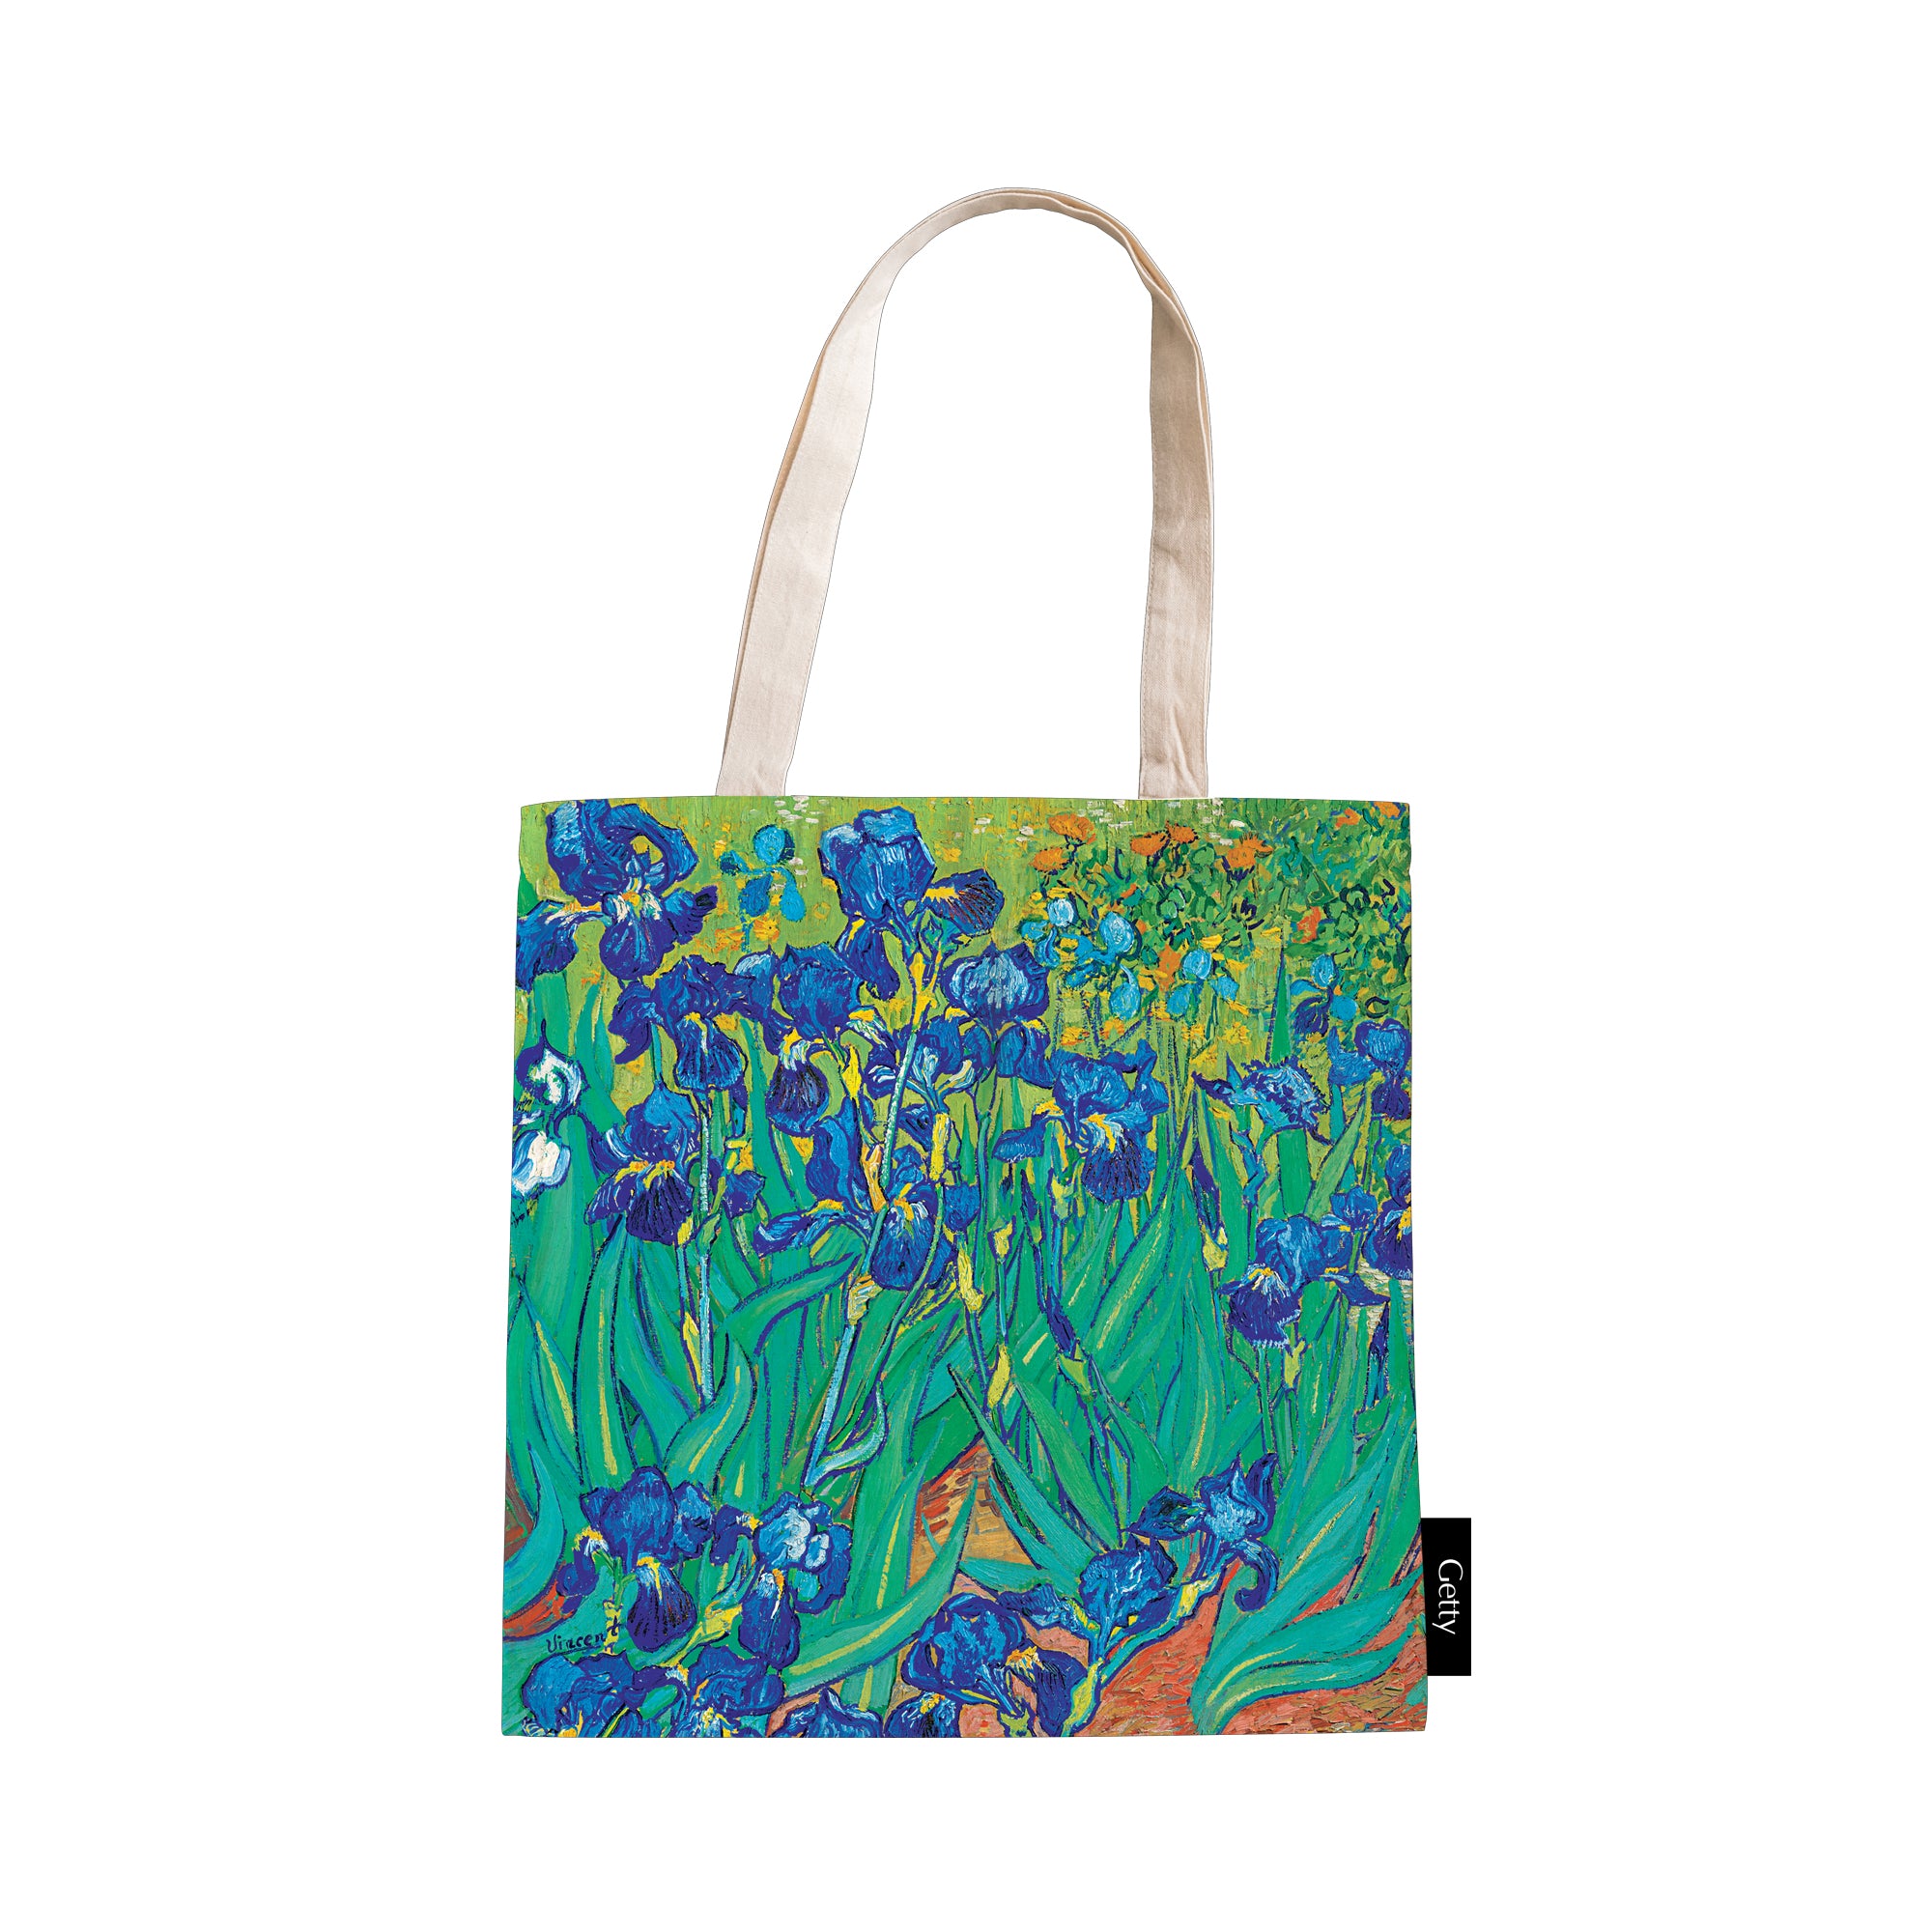 Artsy Tote Bag Vincent Van Gogh Tote Bag Van Gogh Art Gift 